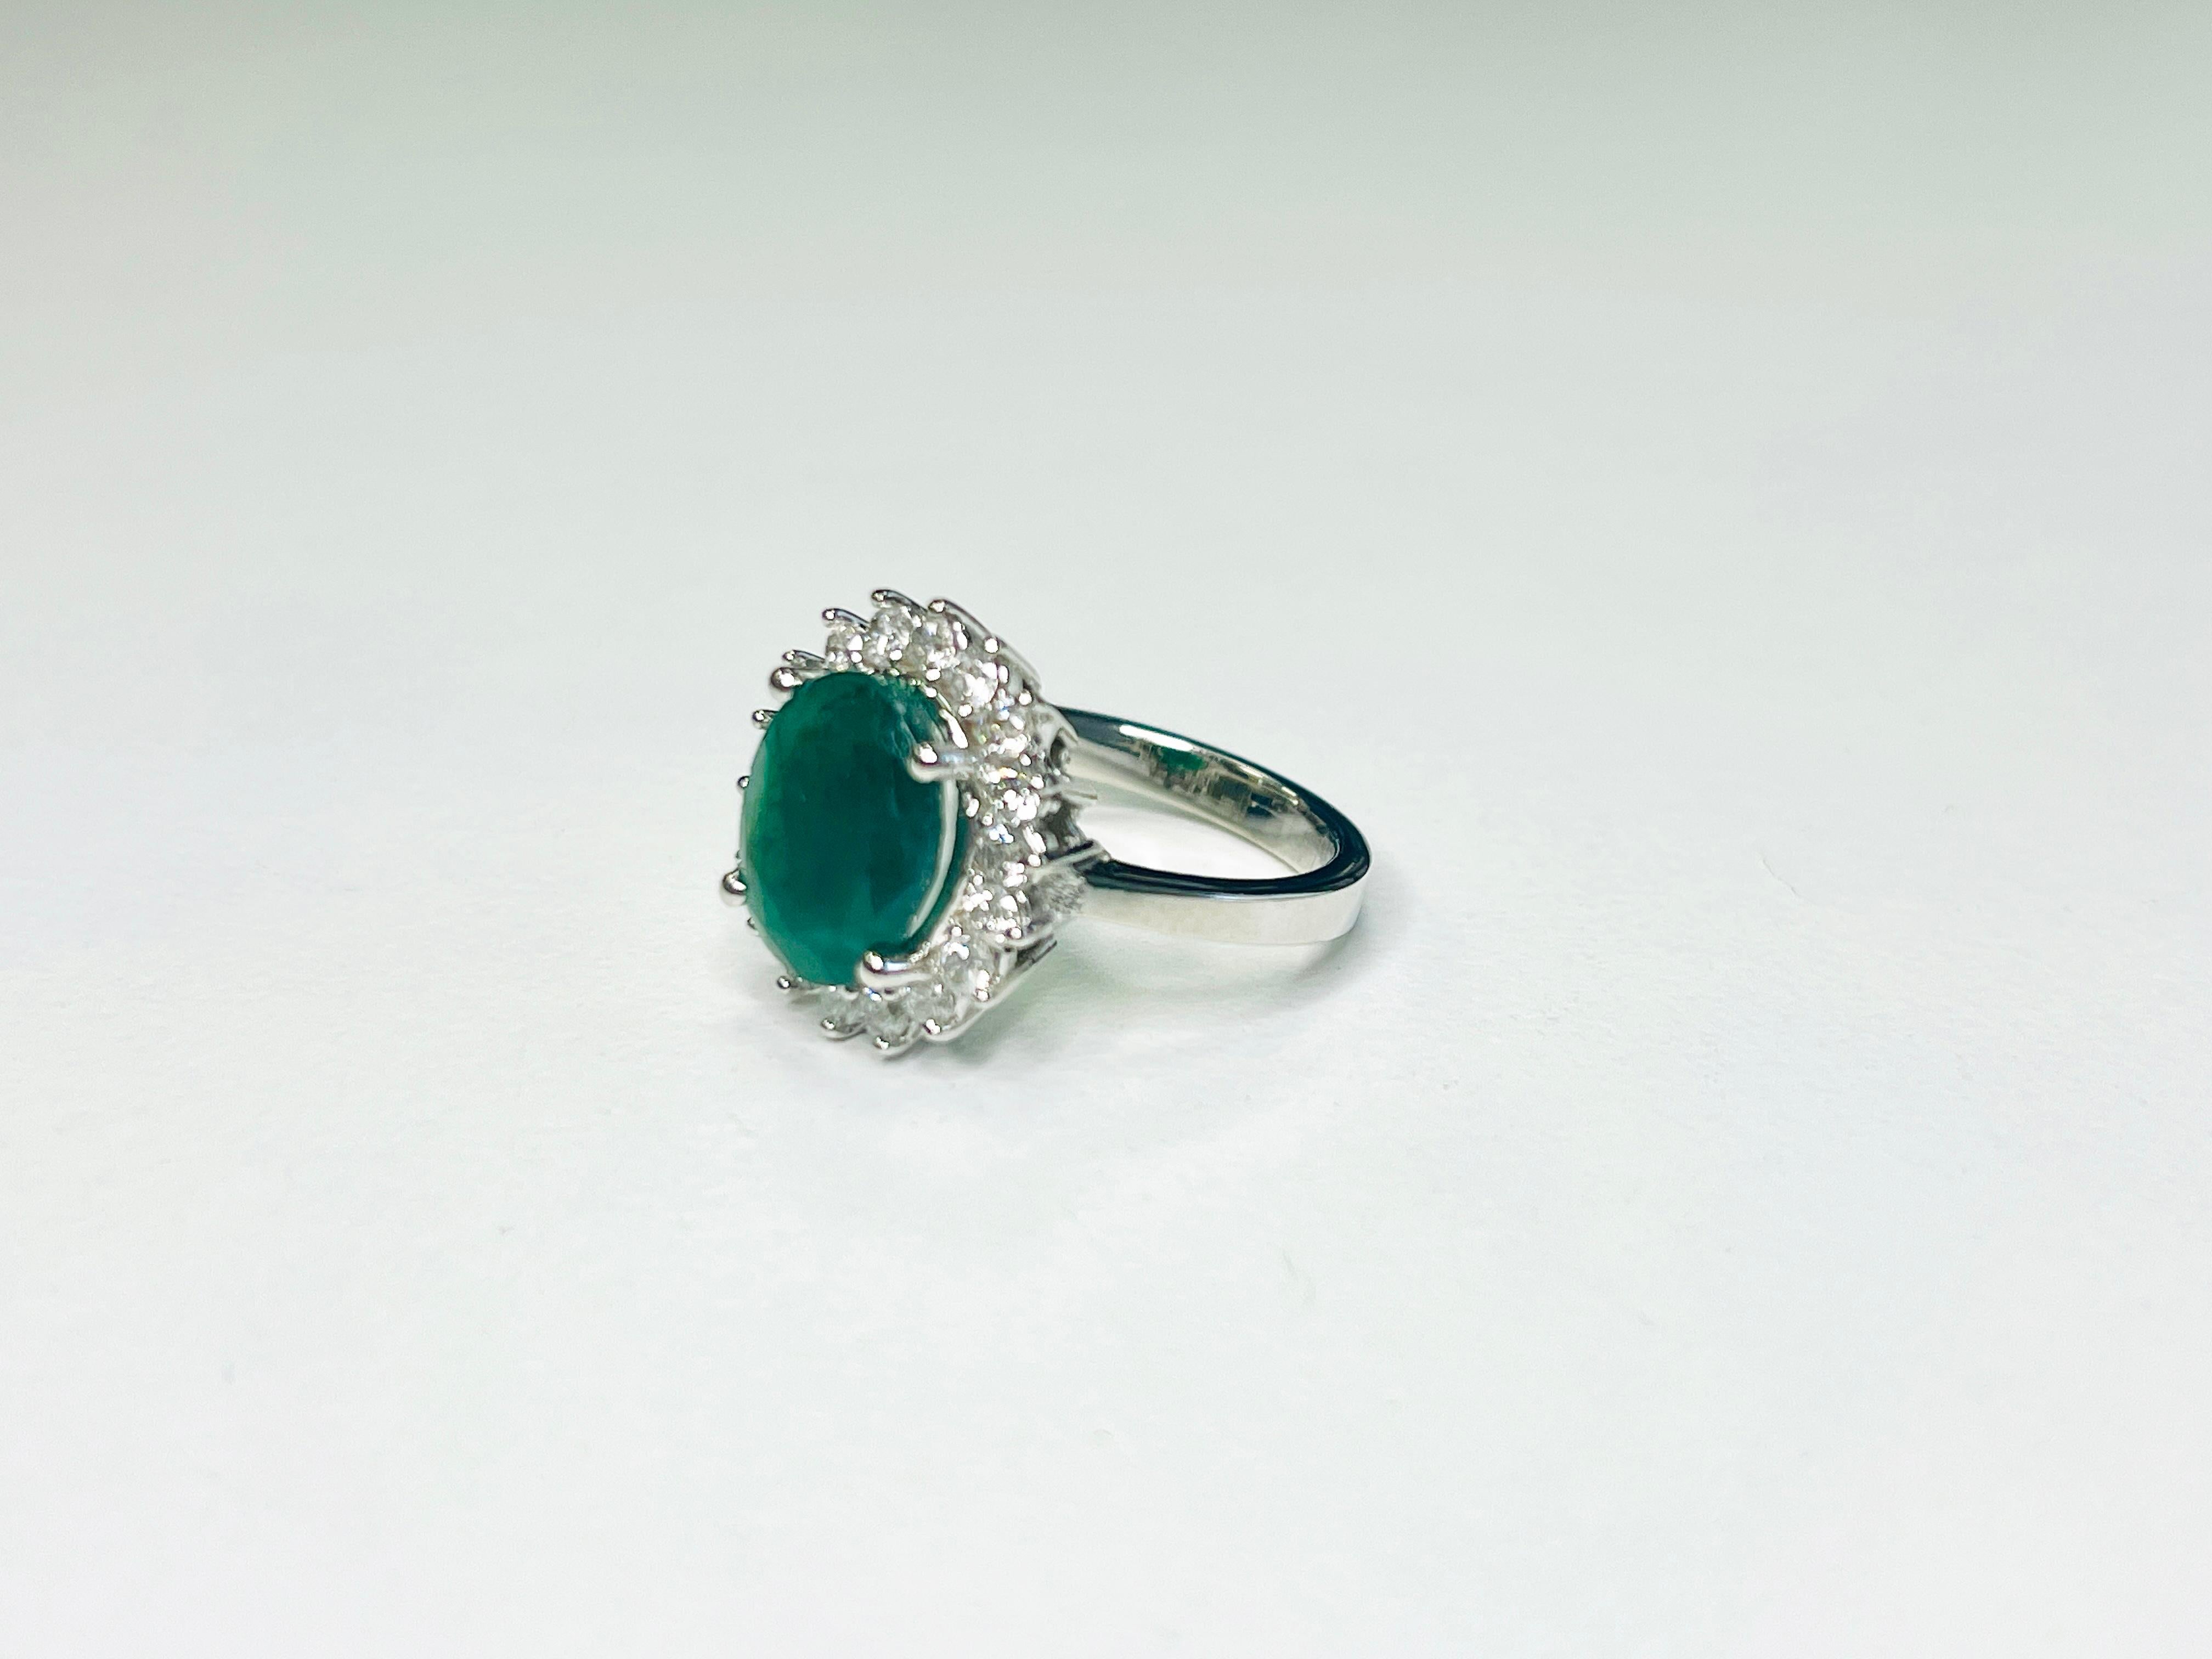 Oval Cut 2.87 Carat Emerald Diamond 14K White Gold Ring